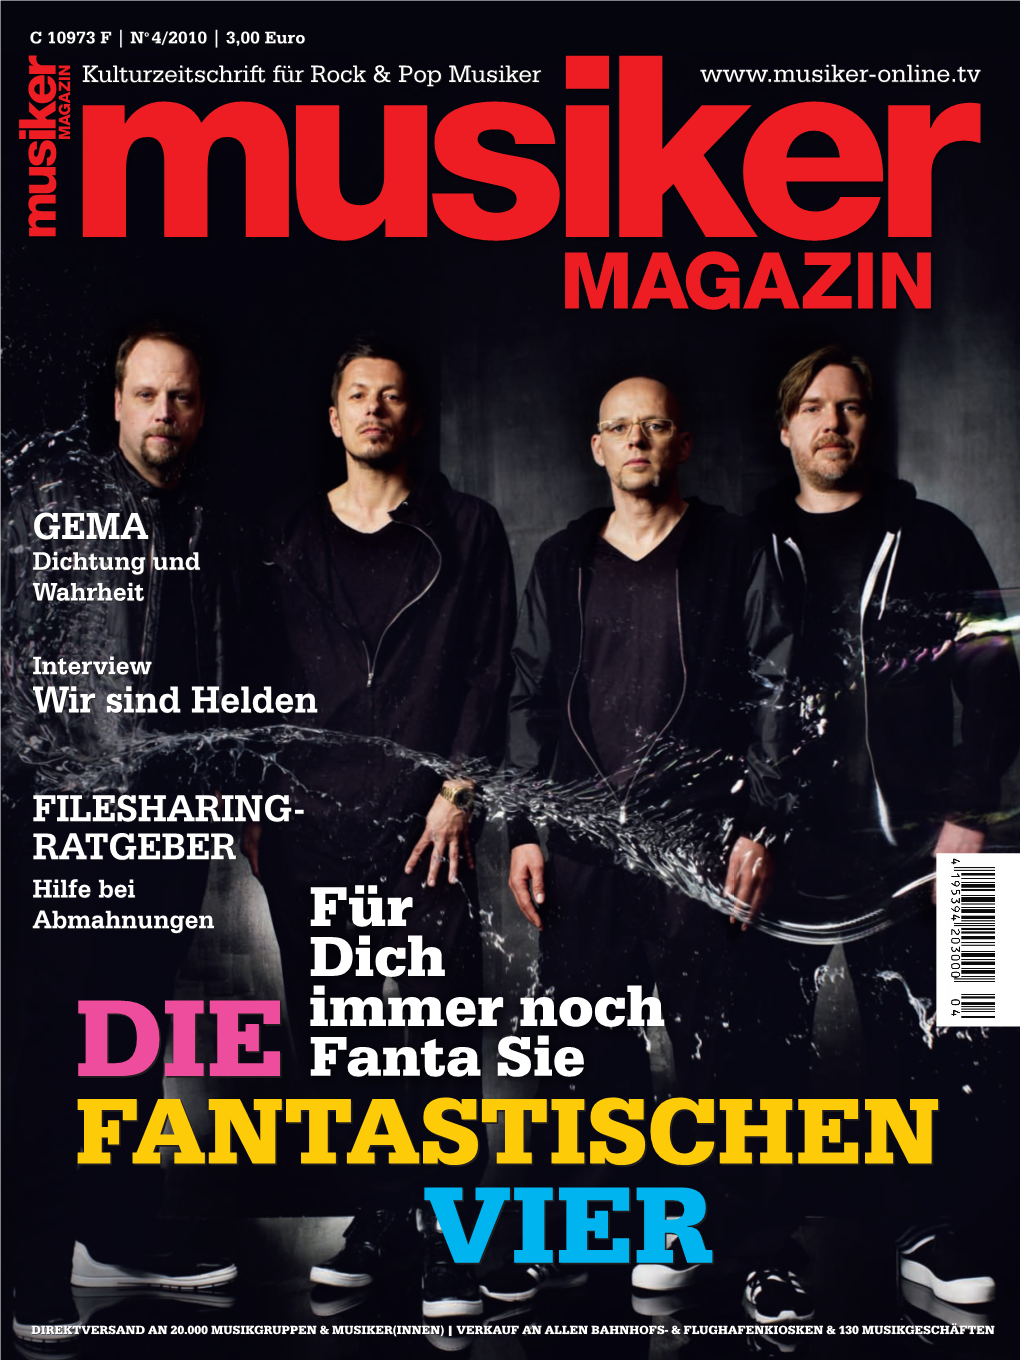 Archiv: Musiker Magazin 04/2010 (PDF)